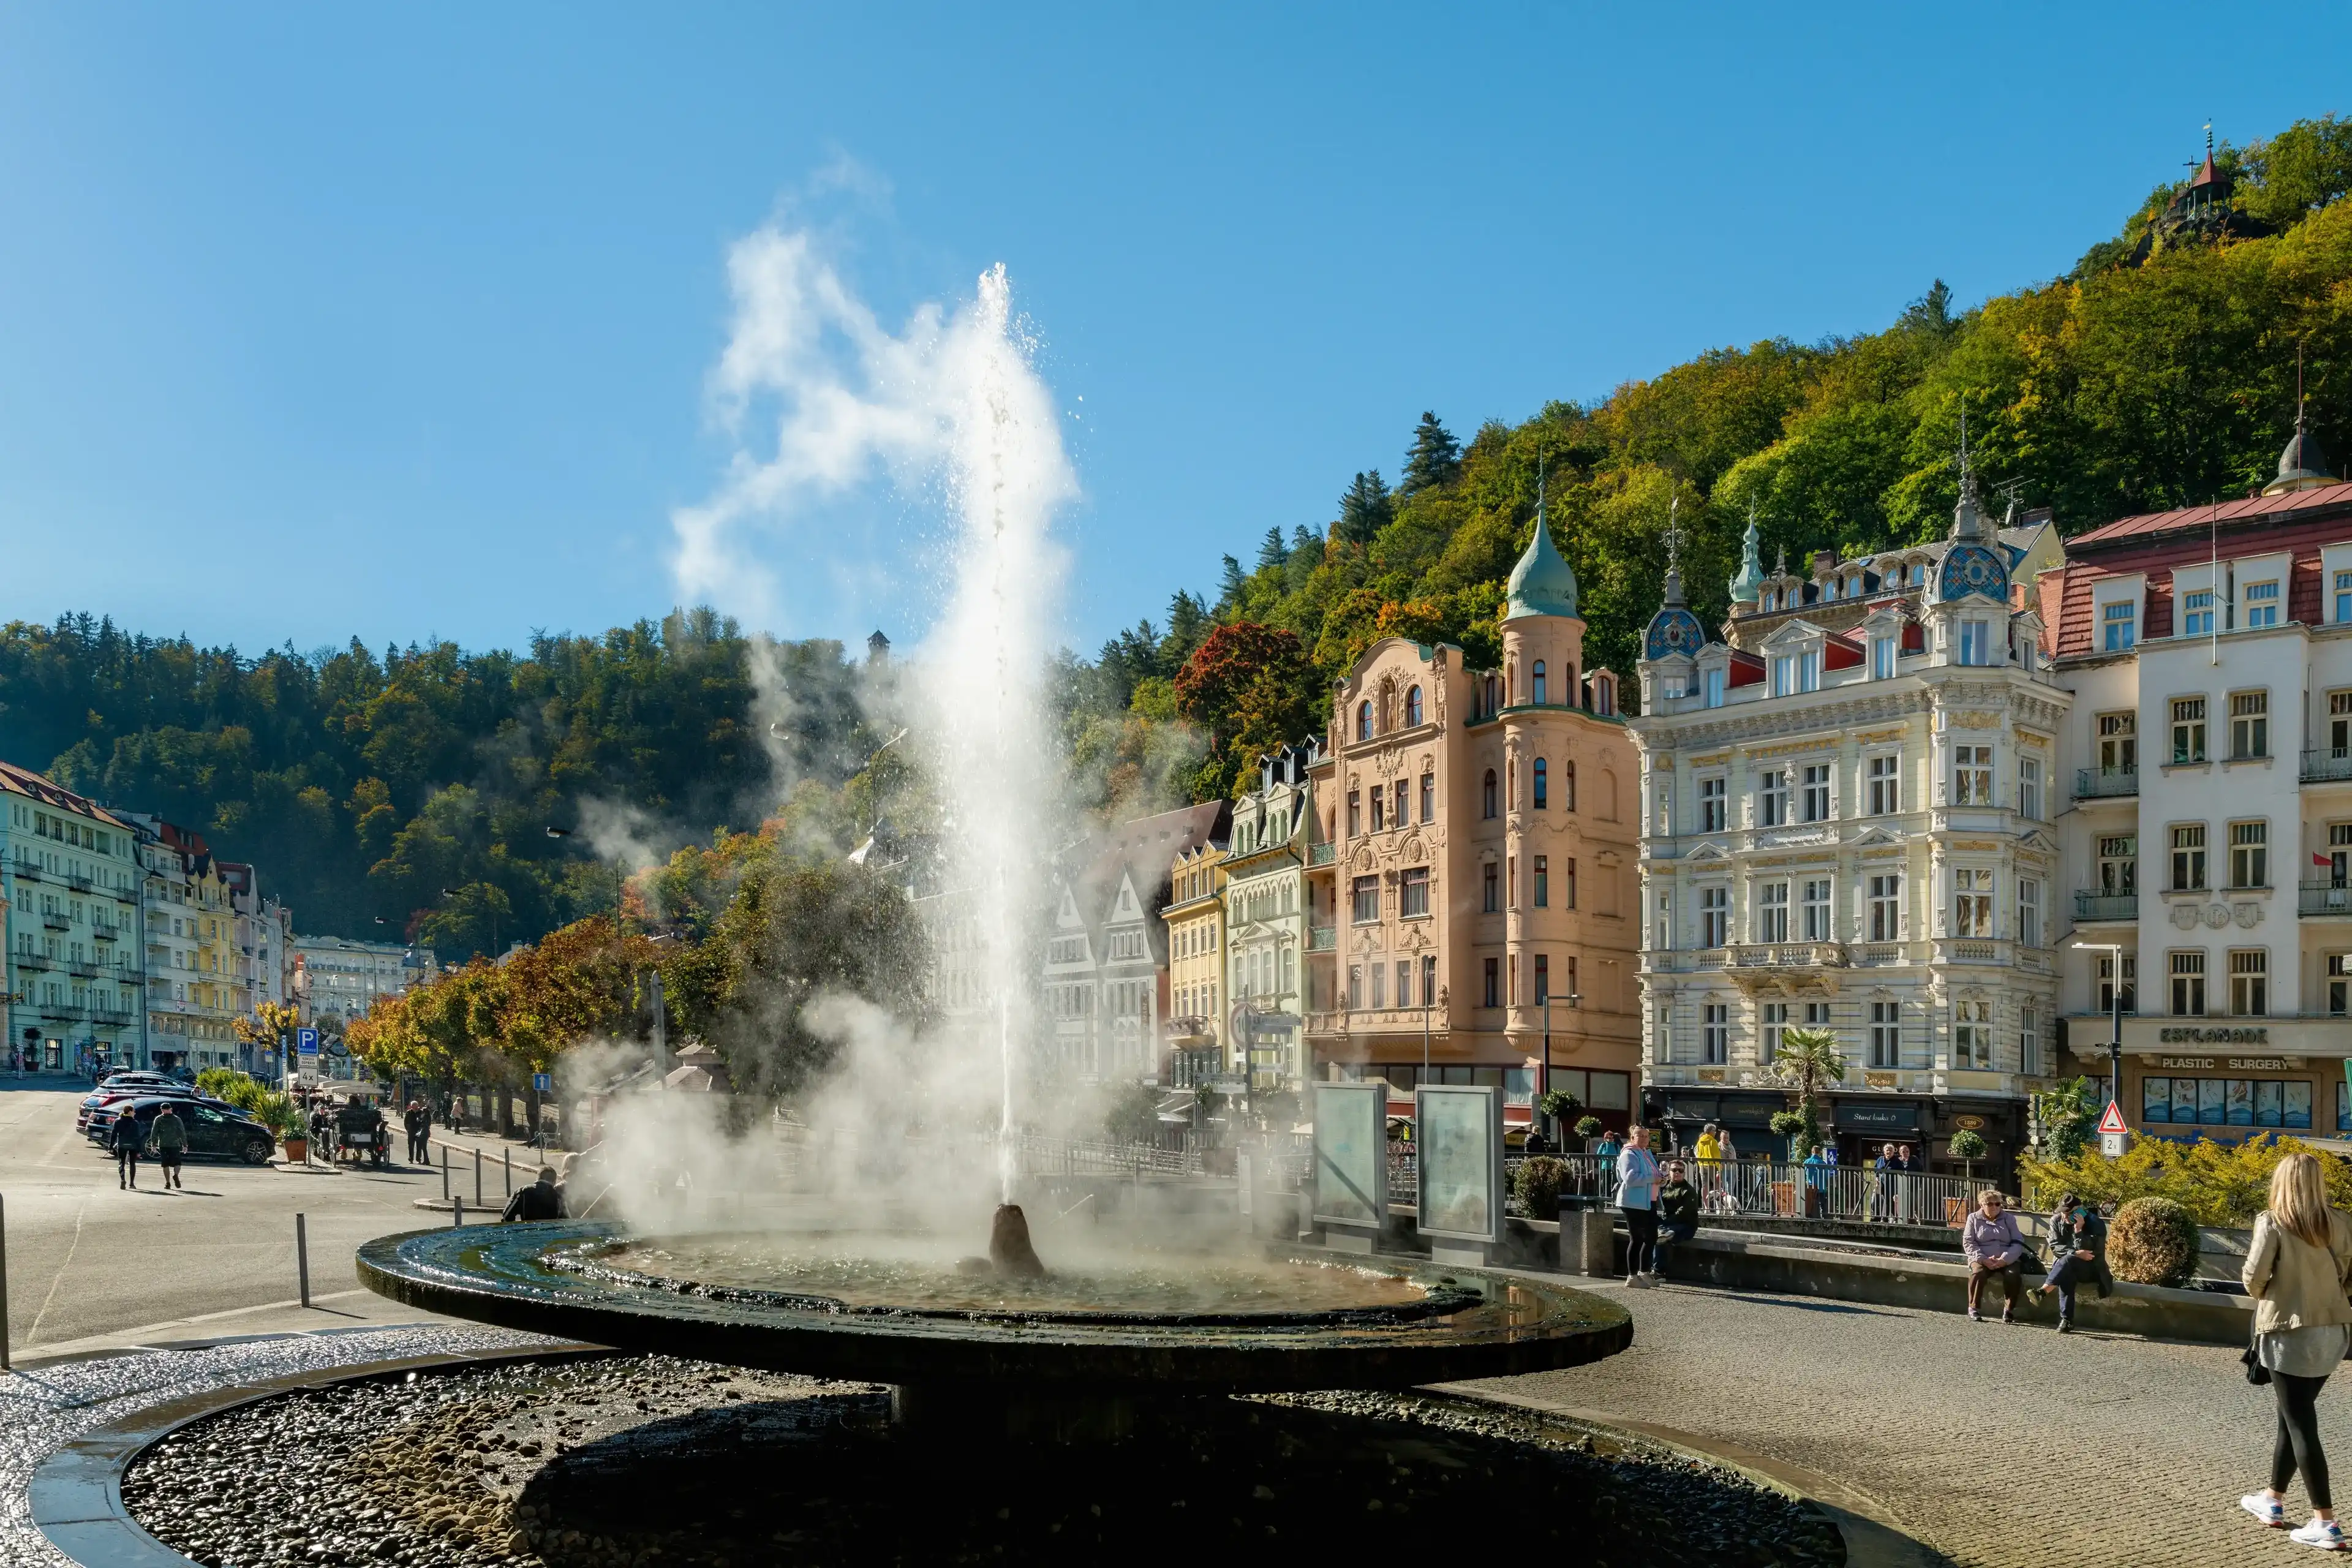 Best Karlovy Vary hotels. Cheap hotels in Karlovy Vary, Czech Republic